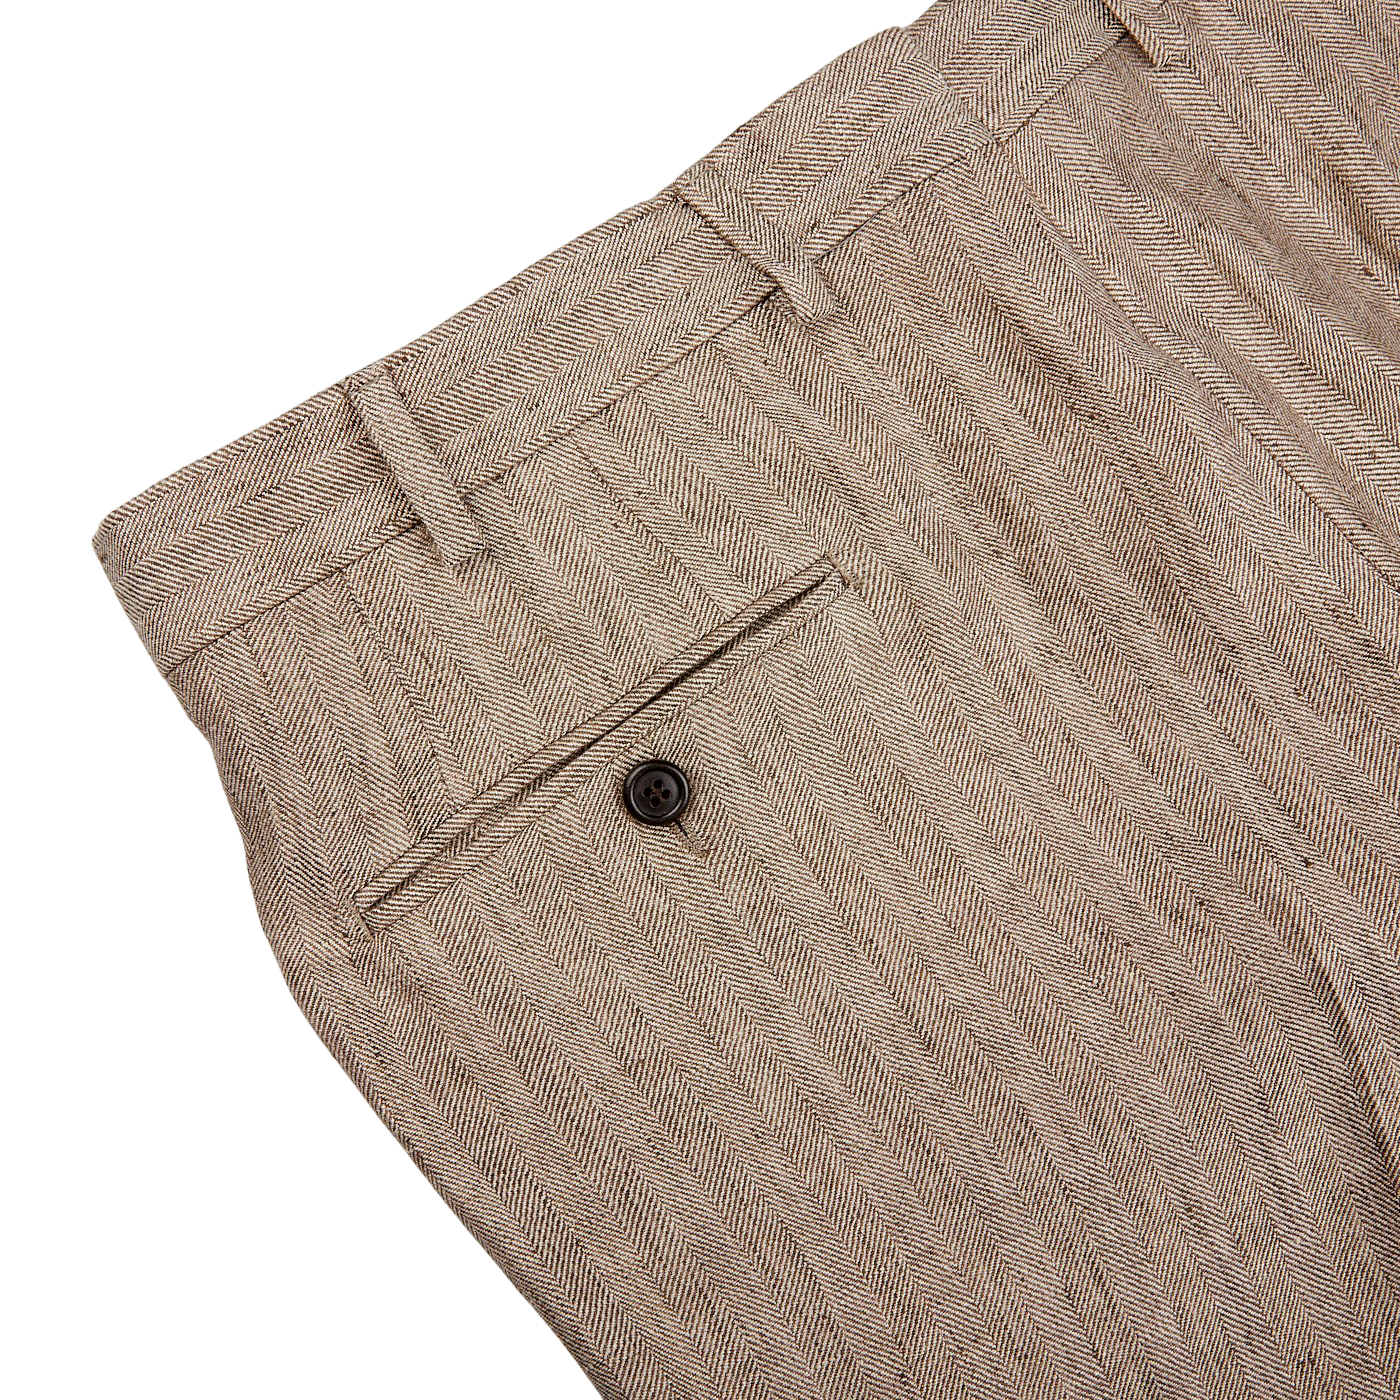 A close up of Luigi Bianchi's Light Brown Herringbone Linen Suit pants.